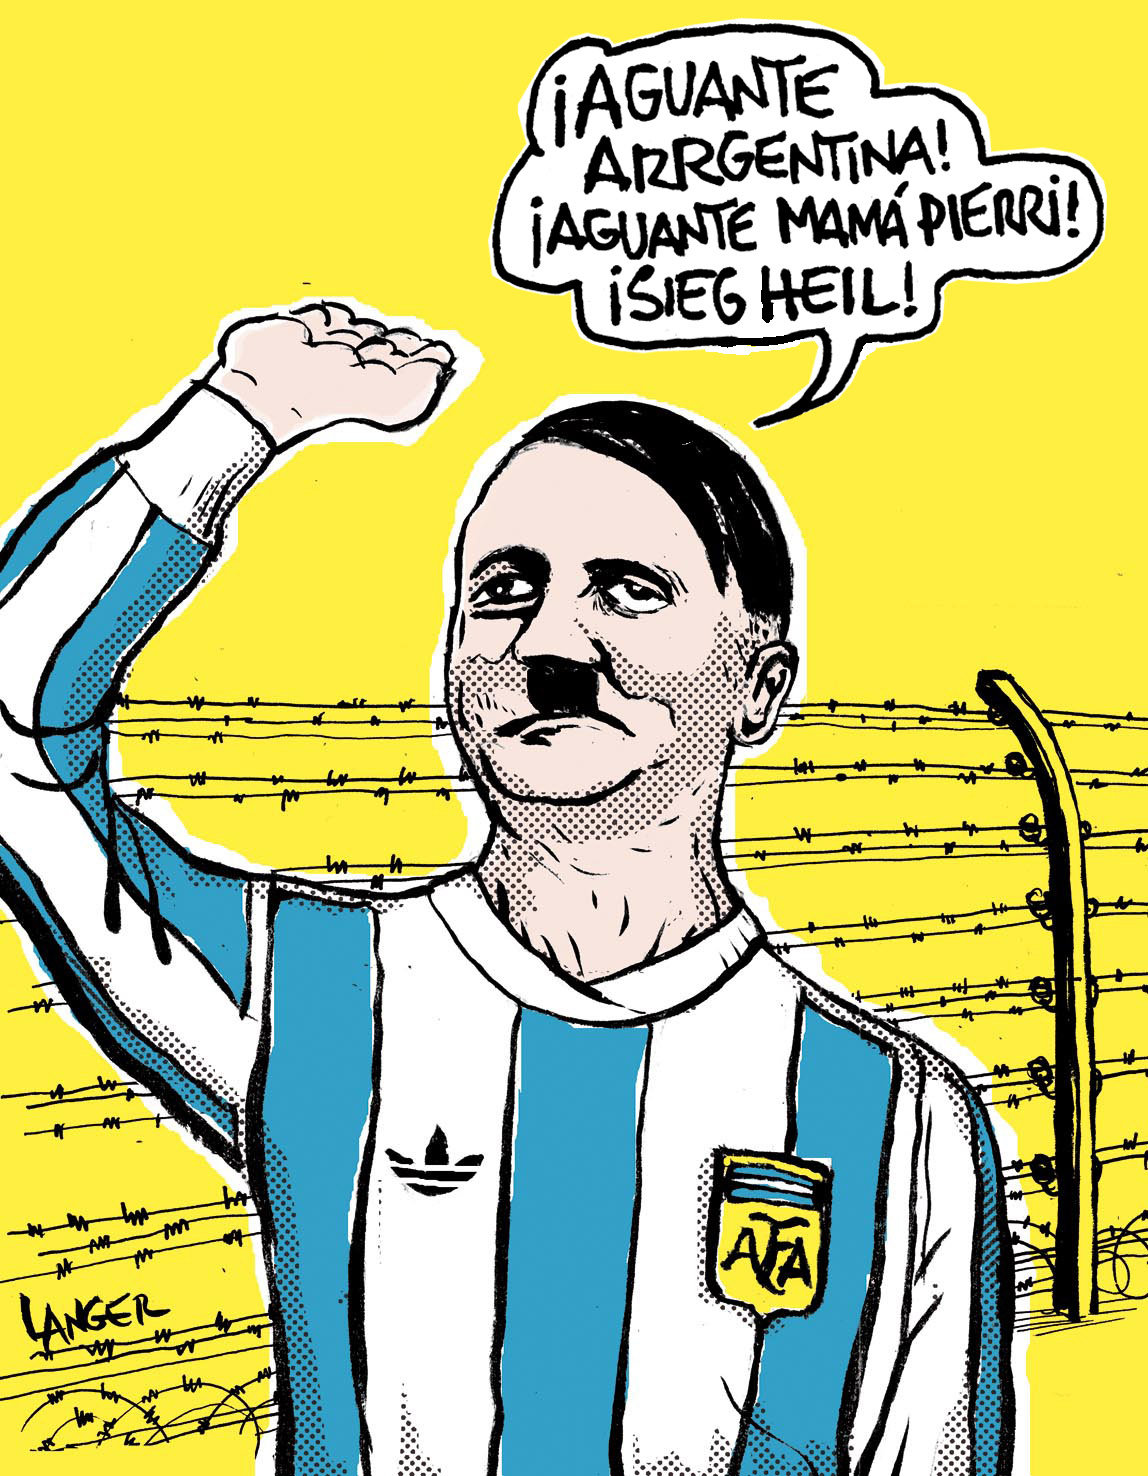 Fig 12 - Langer, Argentina Mundial Sieg Heil (revista Barcelona, julio de 2010)